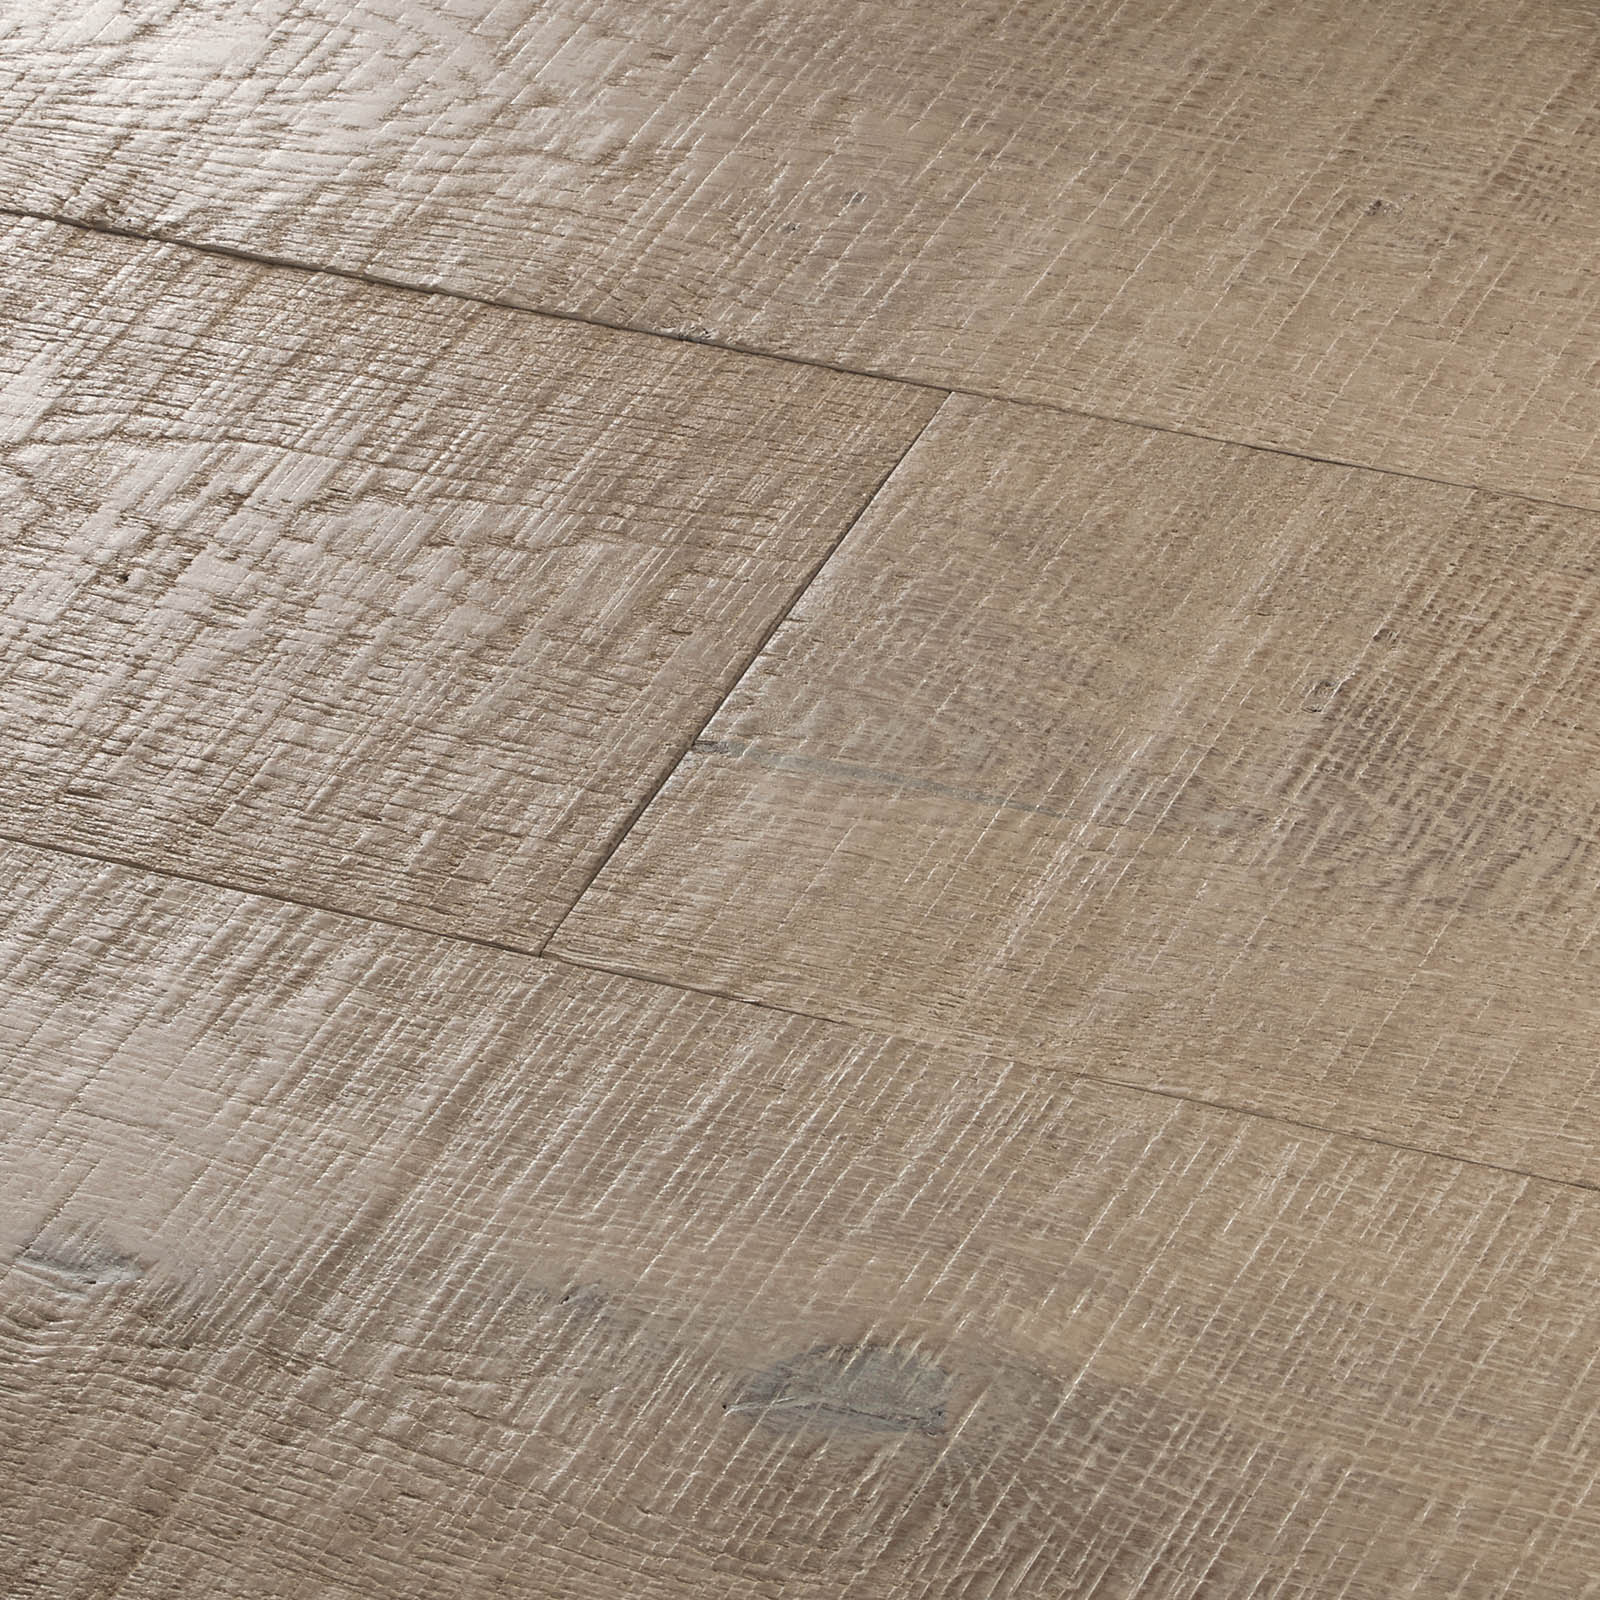 Woodpecker Flooring Engineered Oak chepstow sawn grey